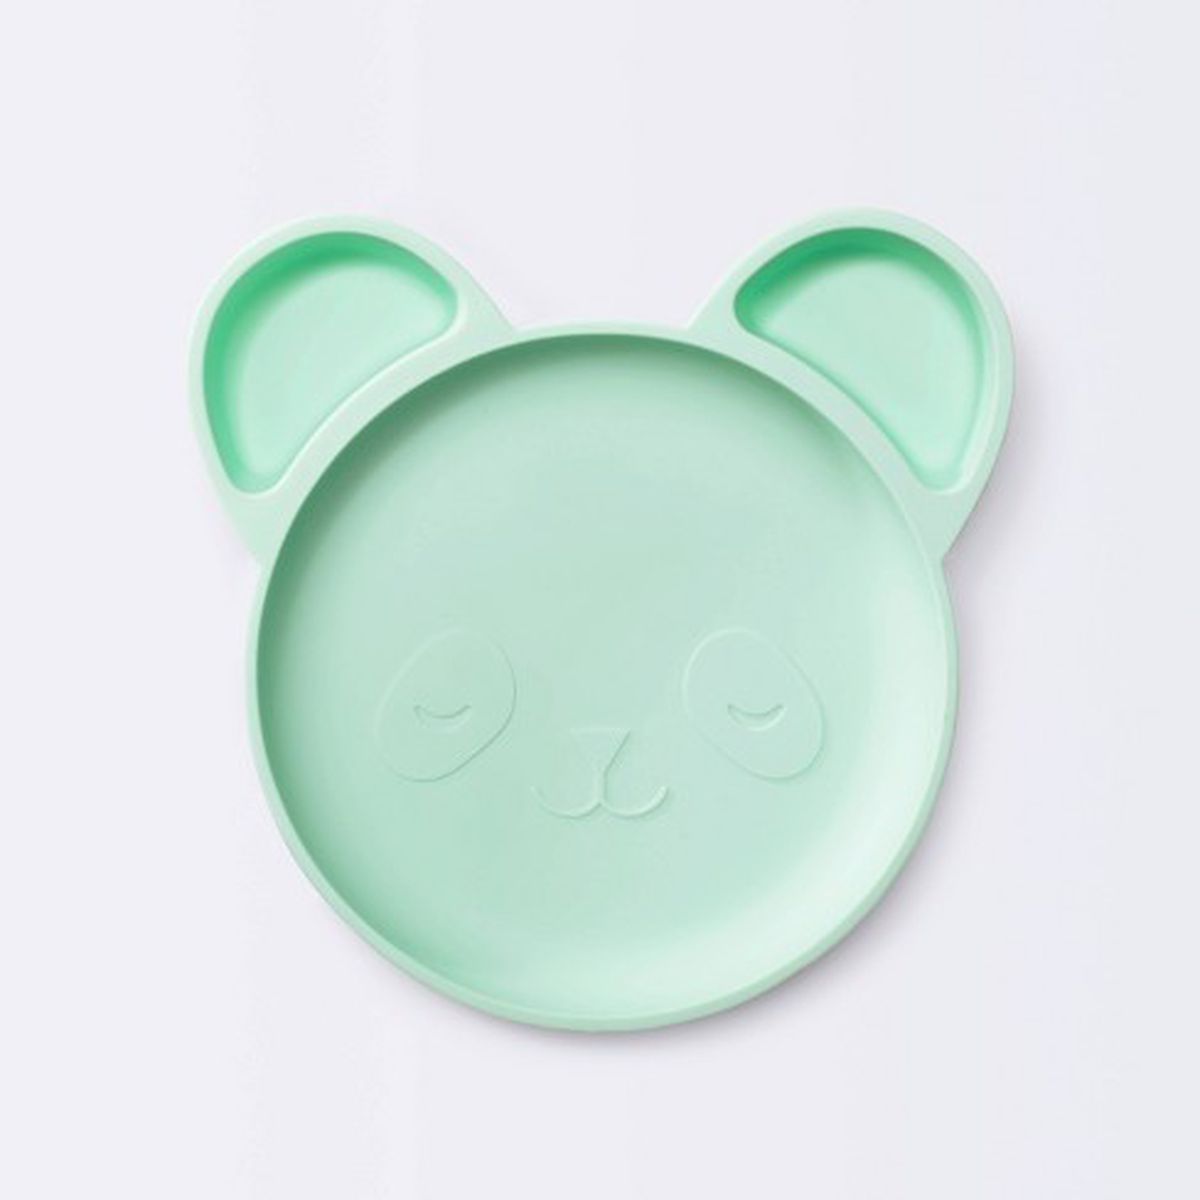 A child’s plate shaped like a panda